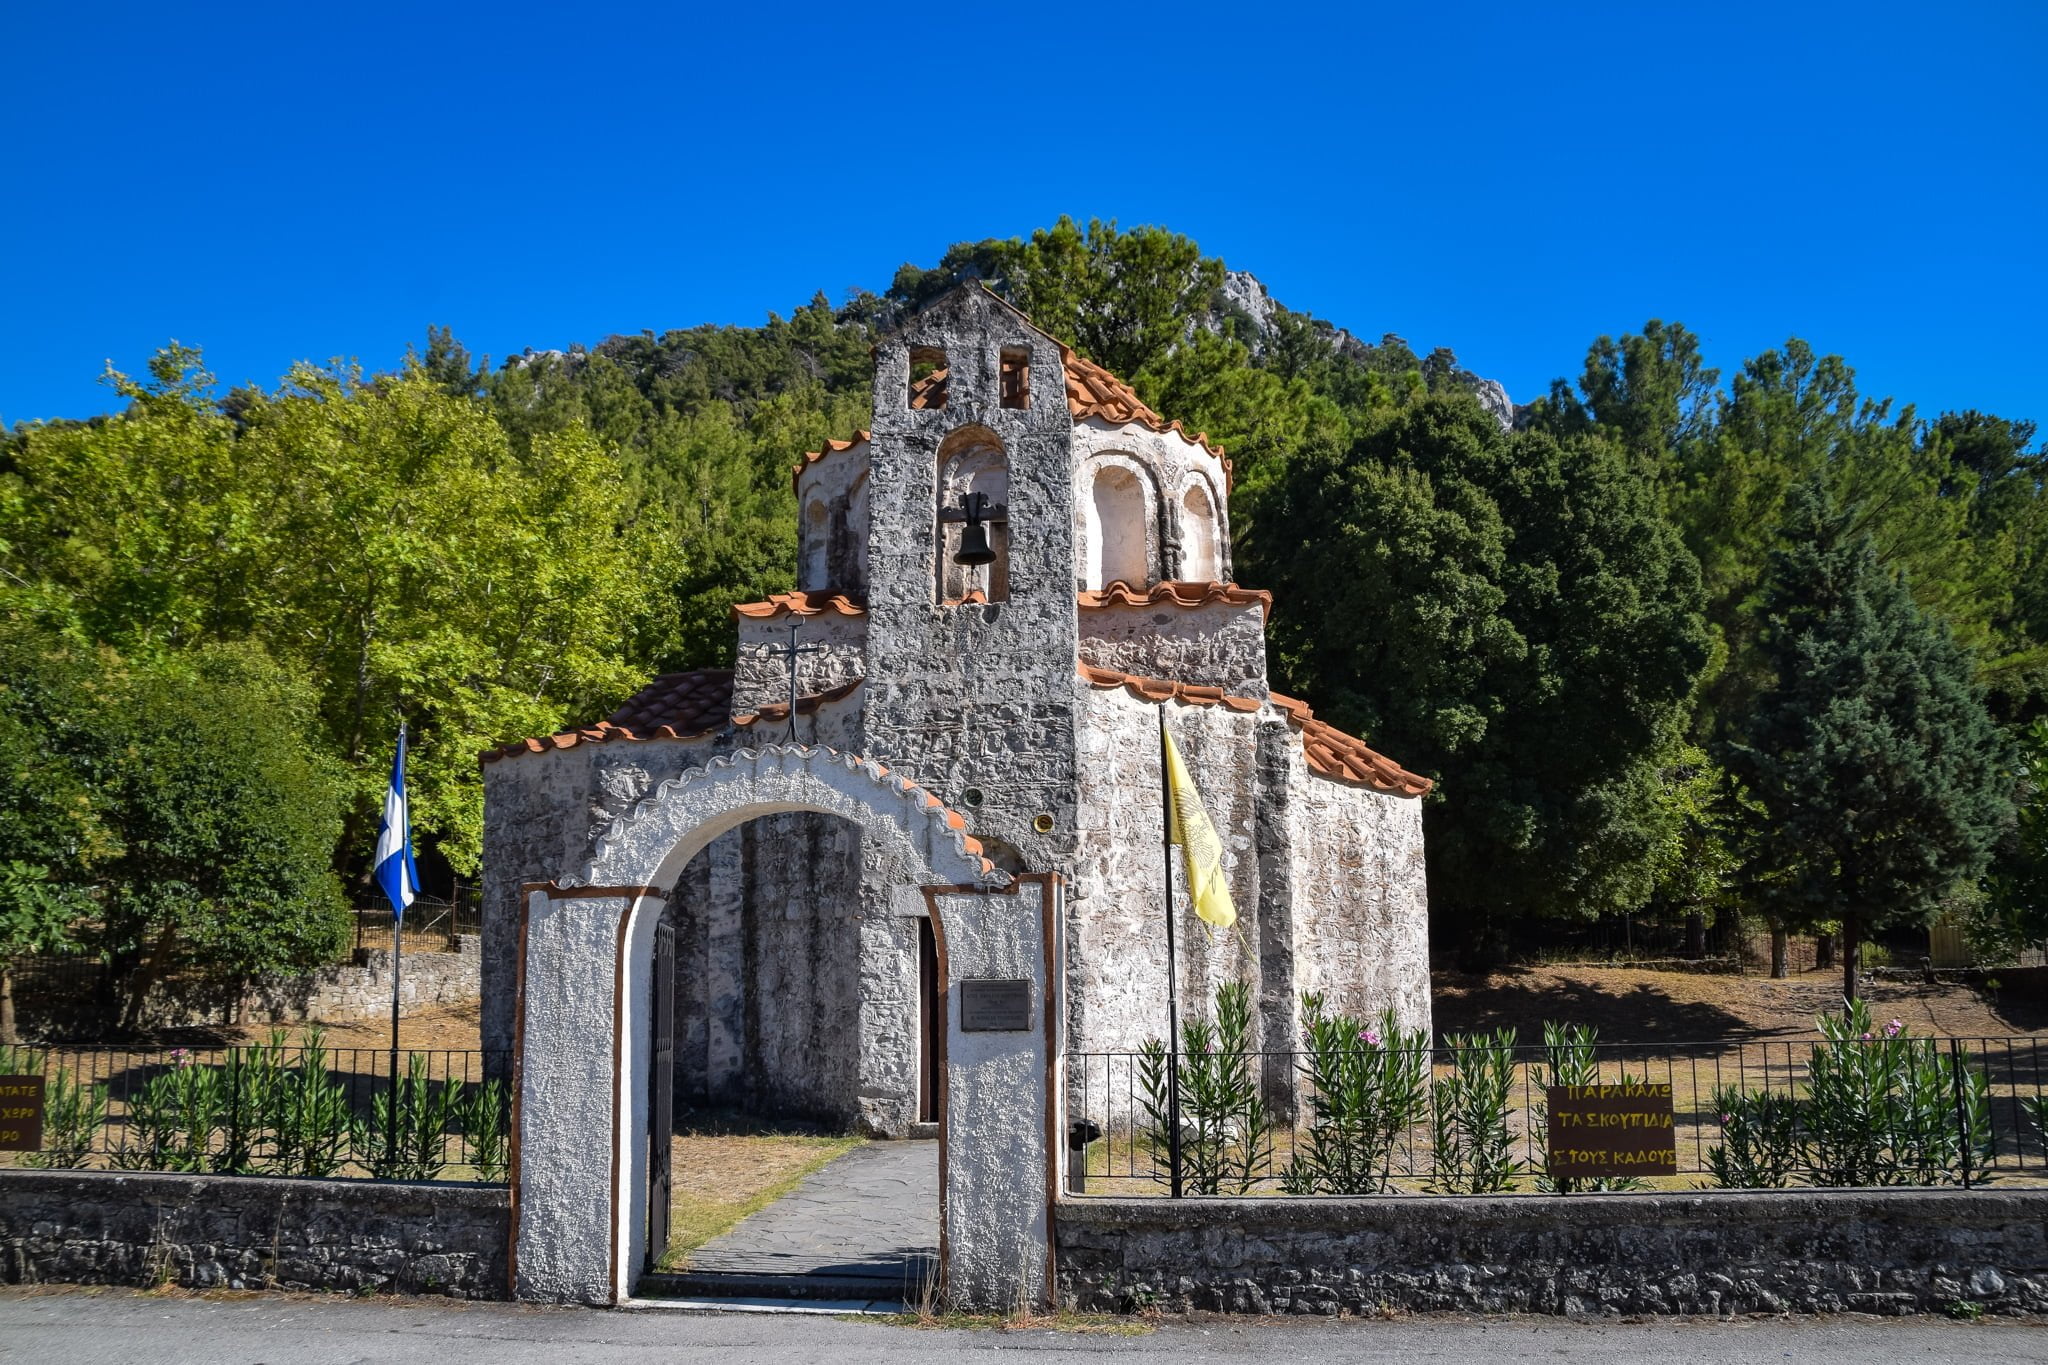 st nikolas fountoukli church in rhodes island